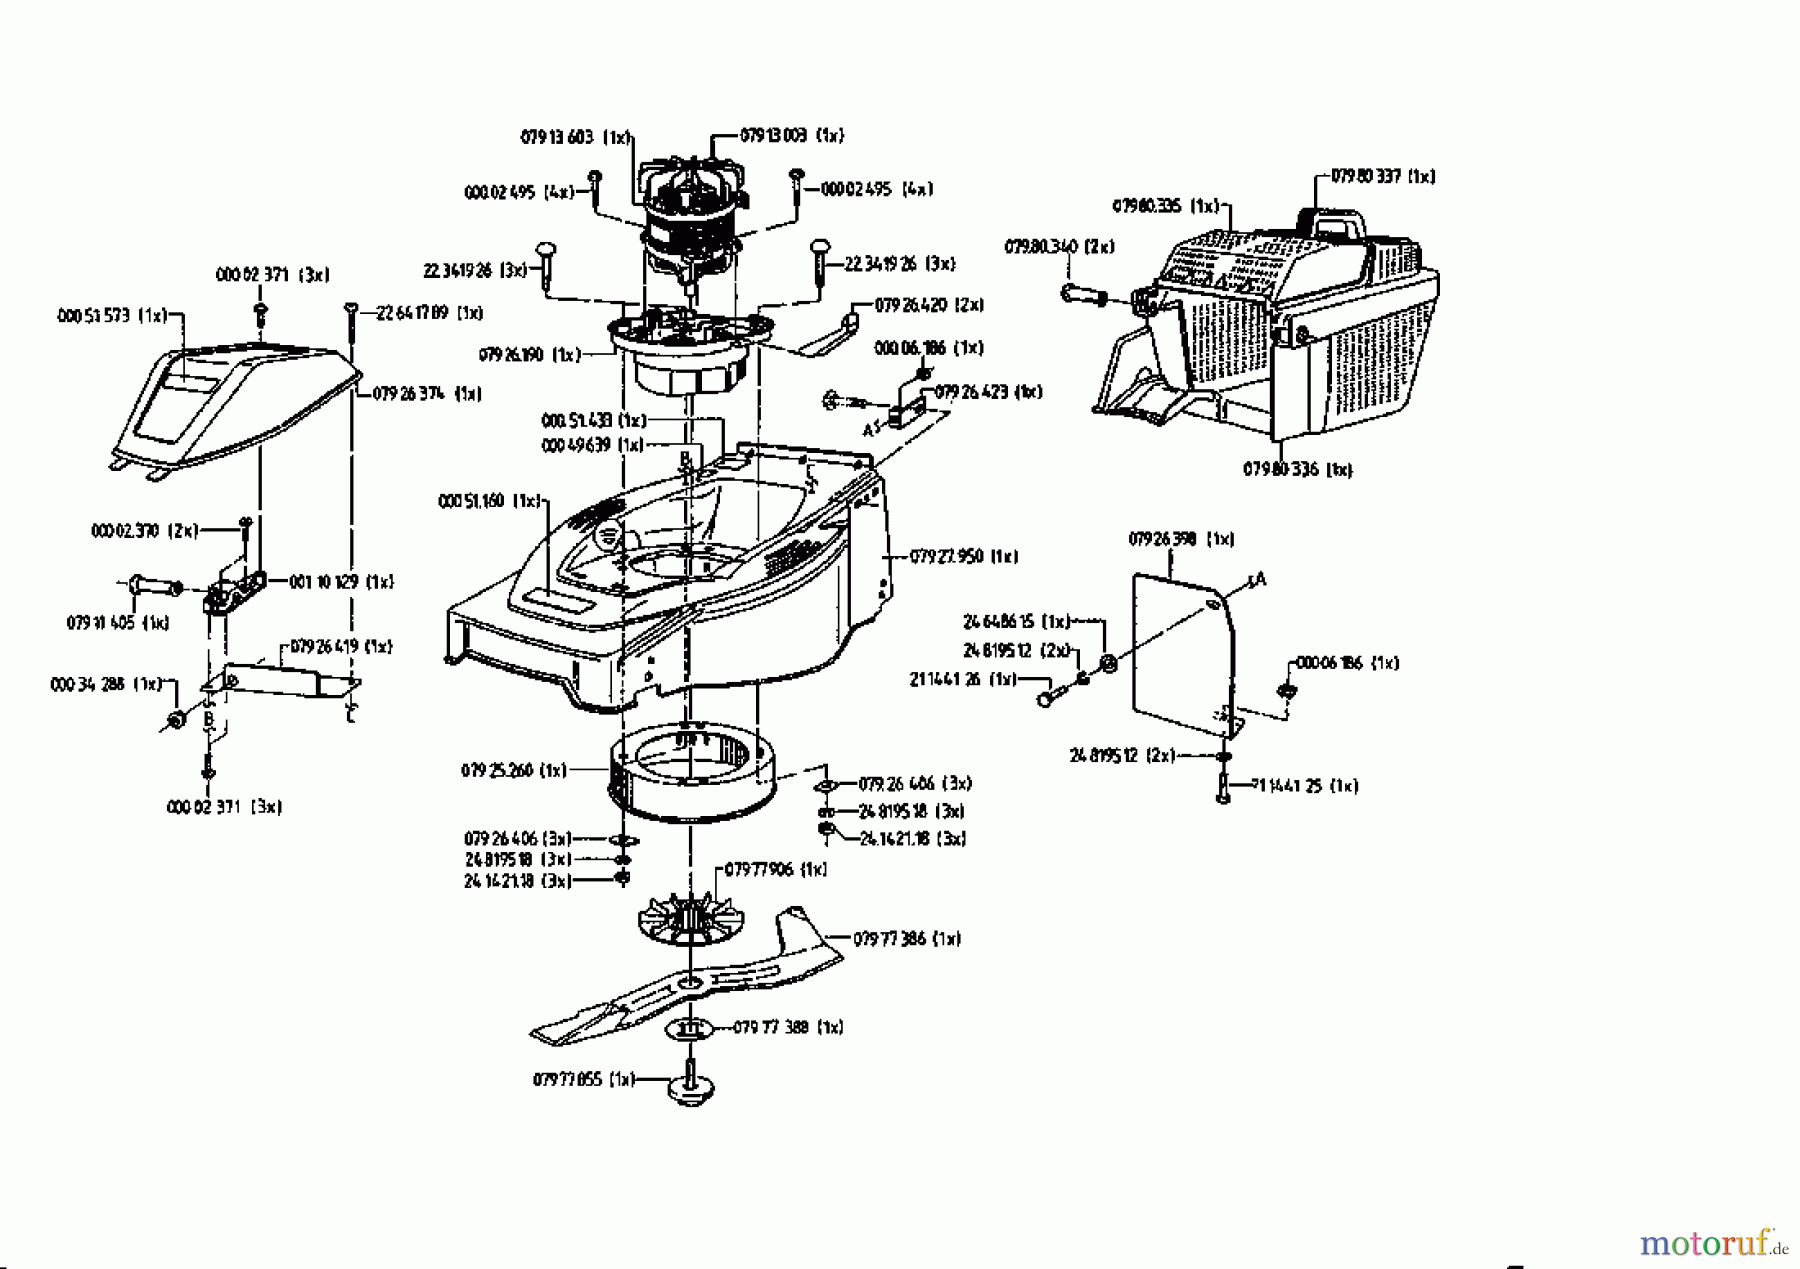  Gutbrod Electric mower HE 48 02817.02  (1994) Basic machine